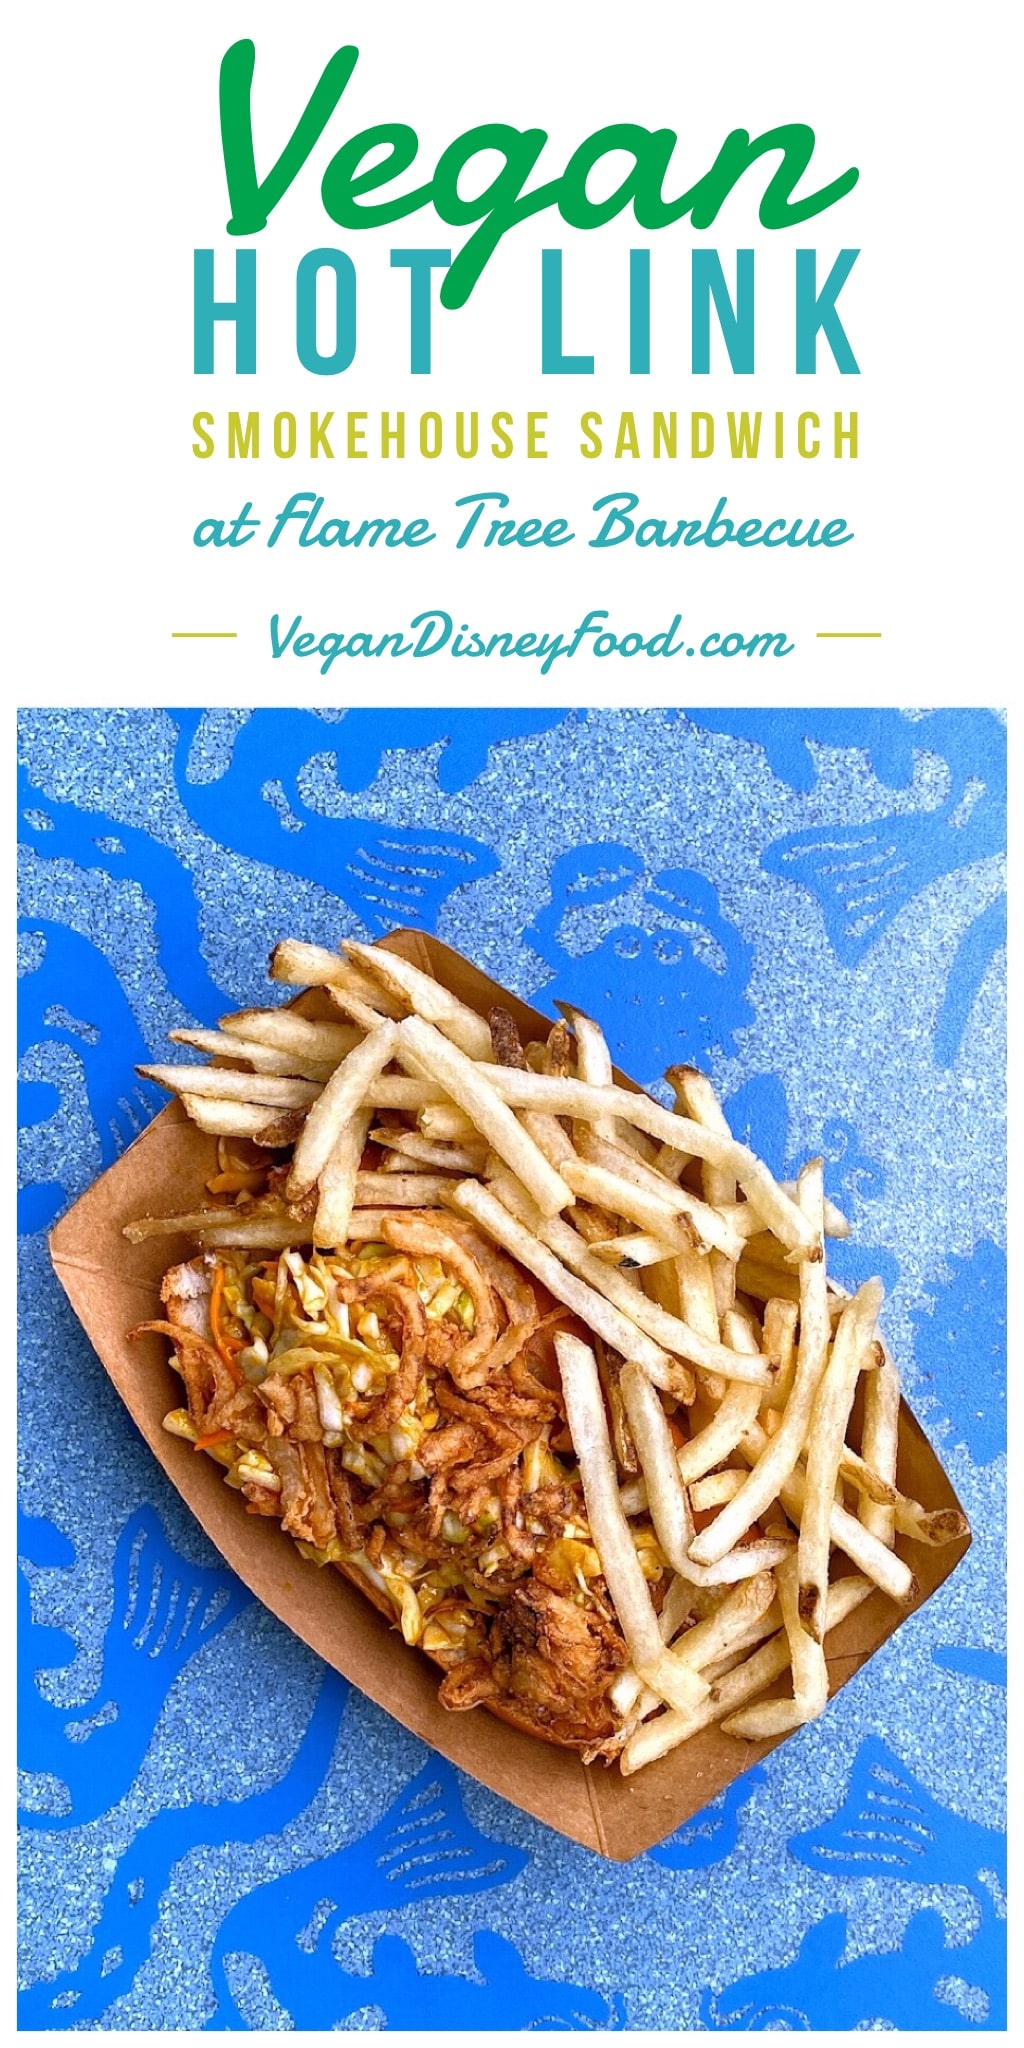 Vegan Hot Link Smokehouse Sandwich at Flame Tree Barbecue in Animal Kingdom at Walt Disney World